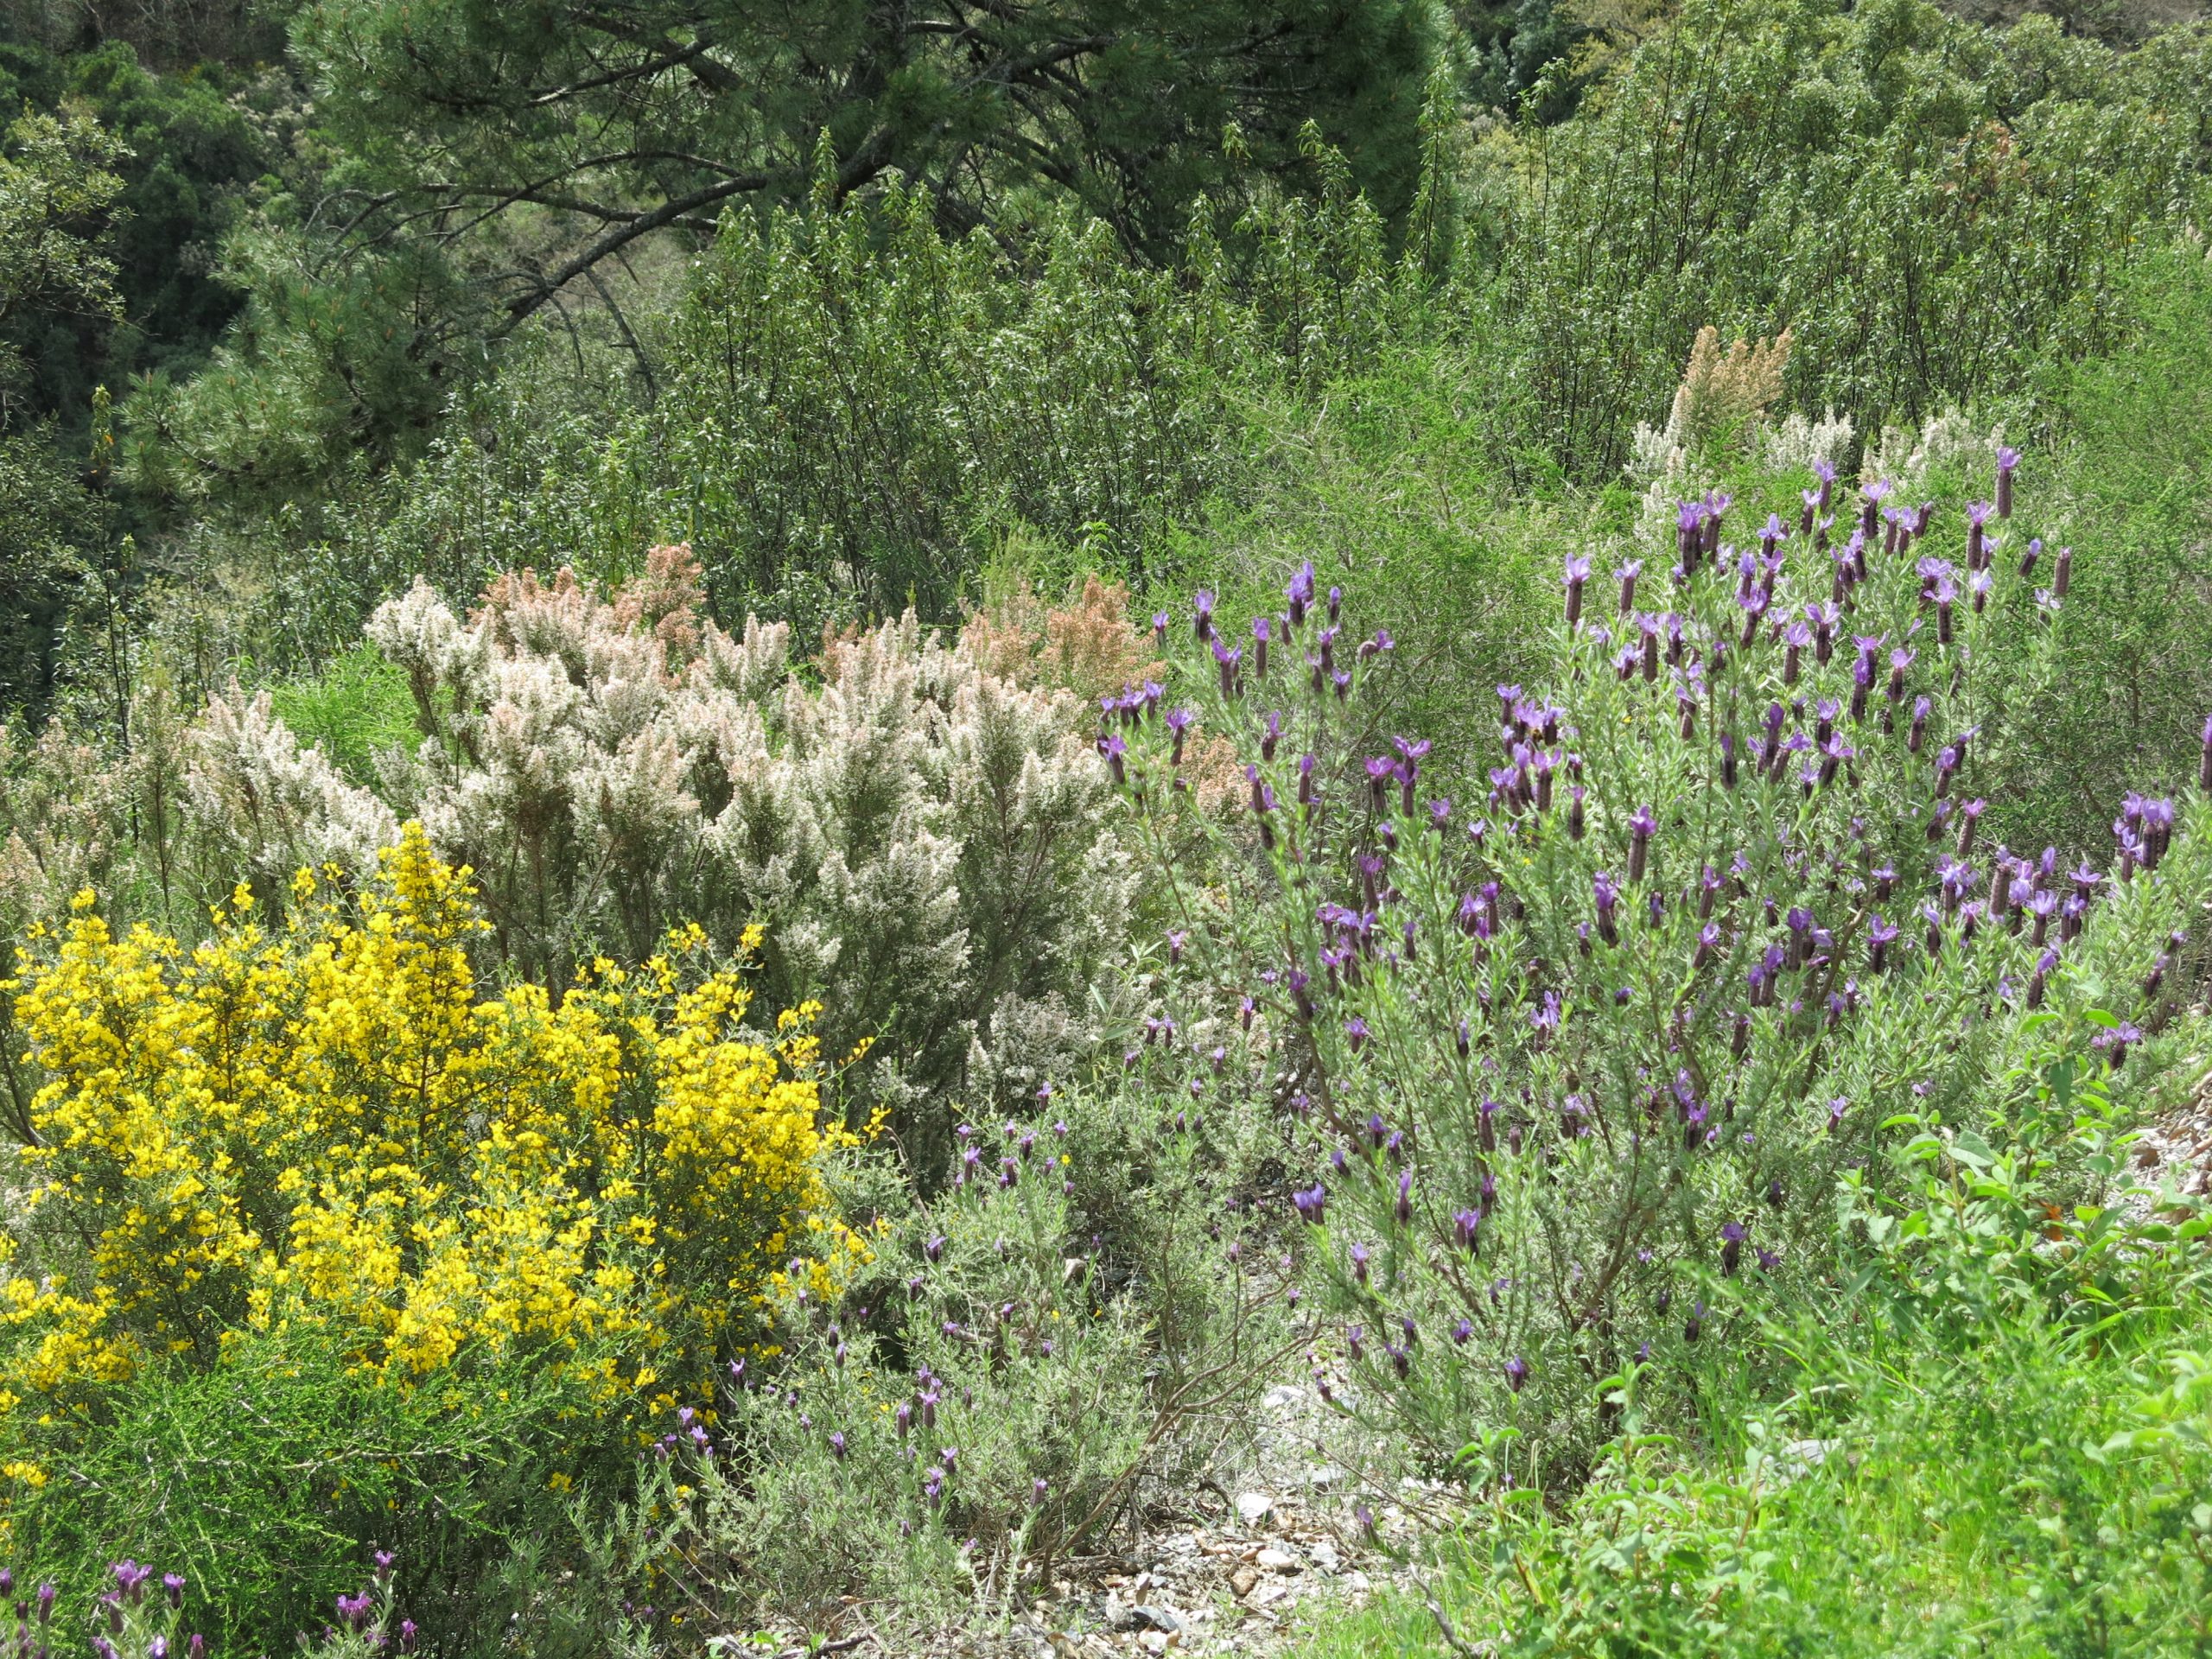 Biodiversity of the mediterranean vegetation